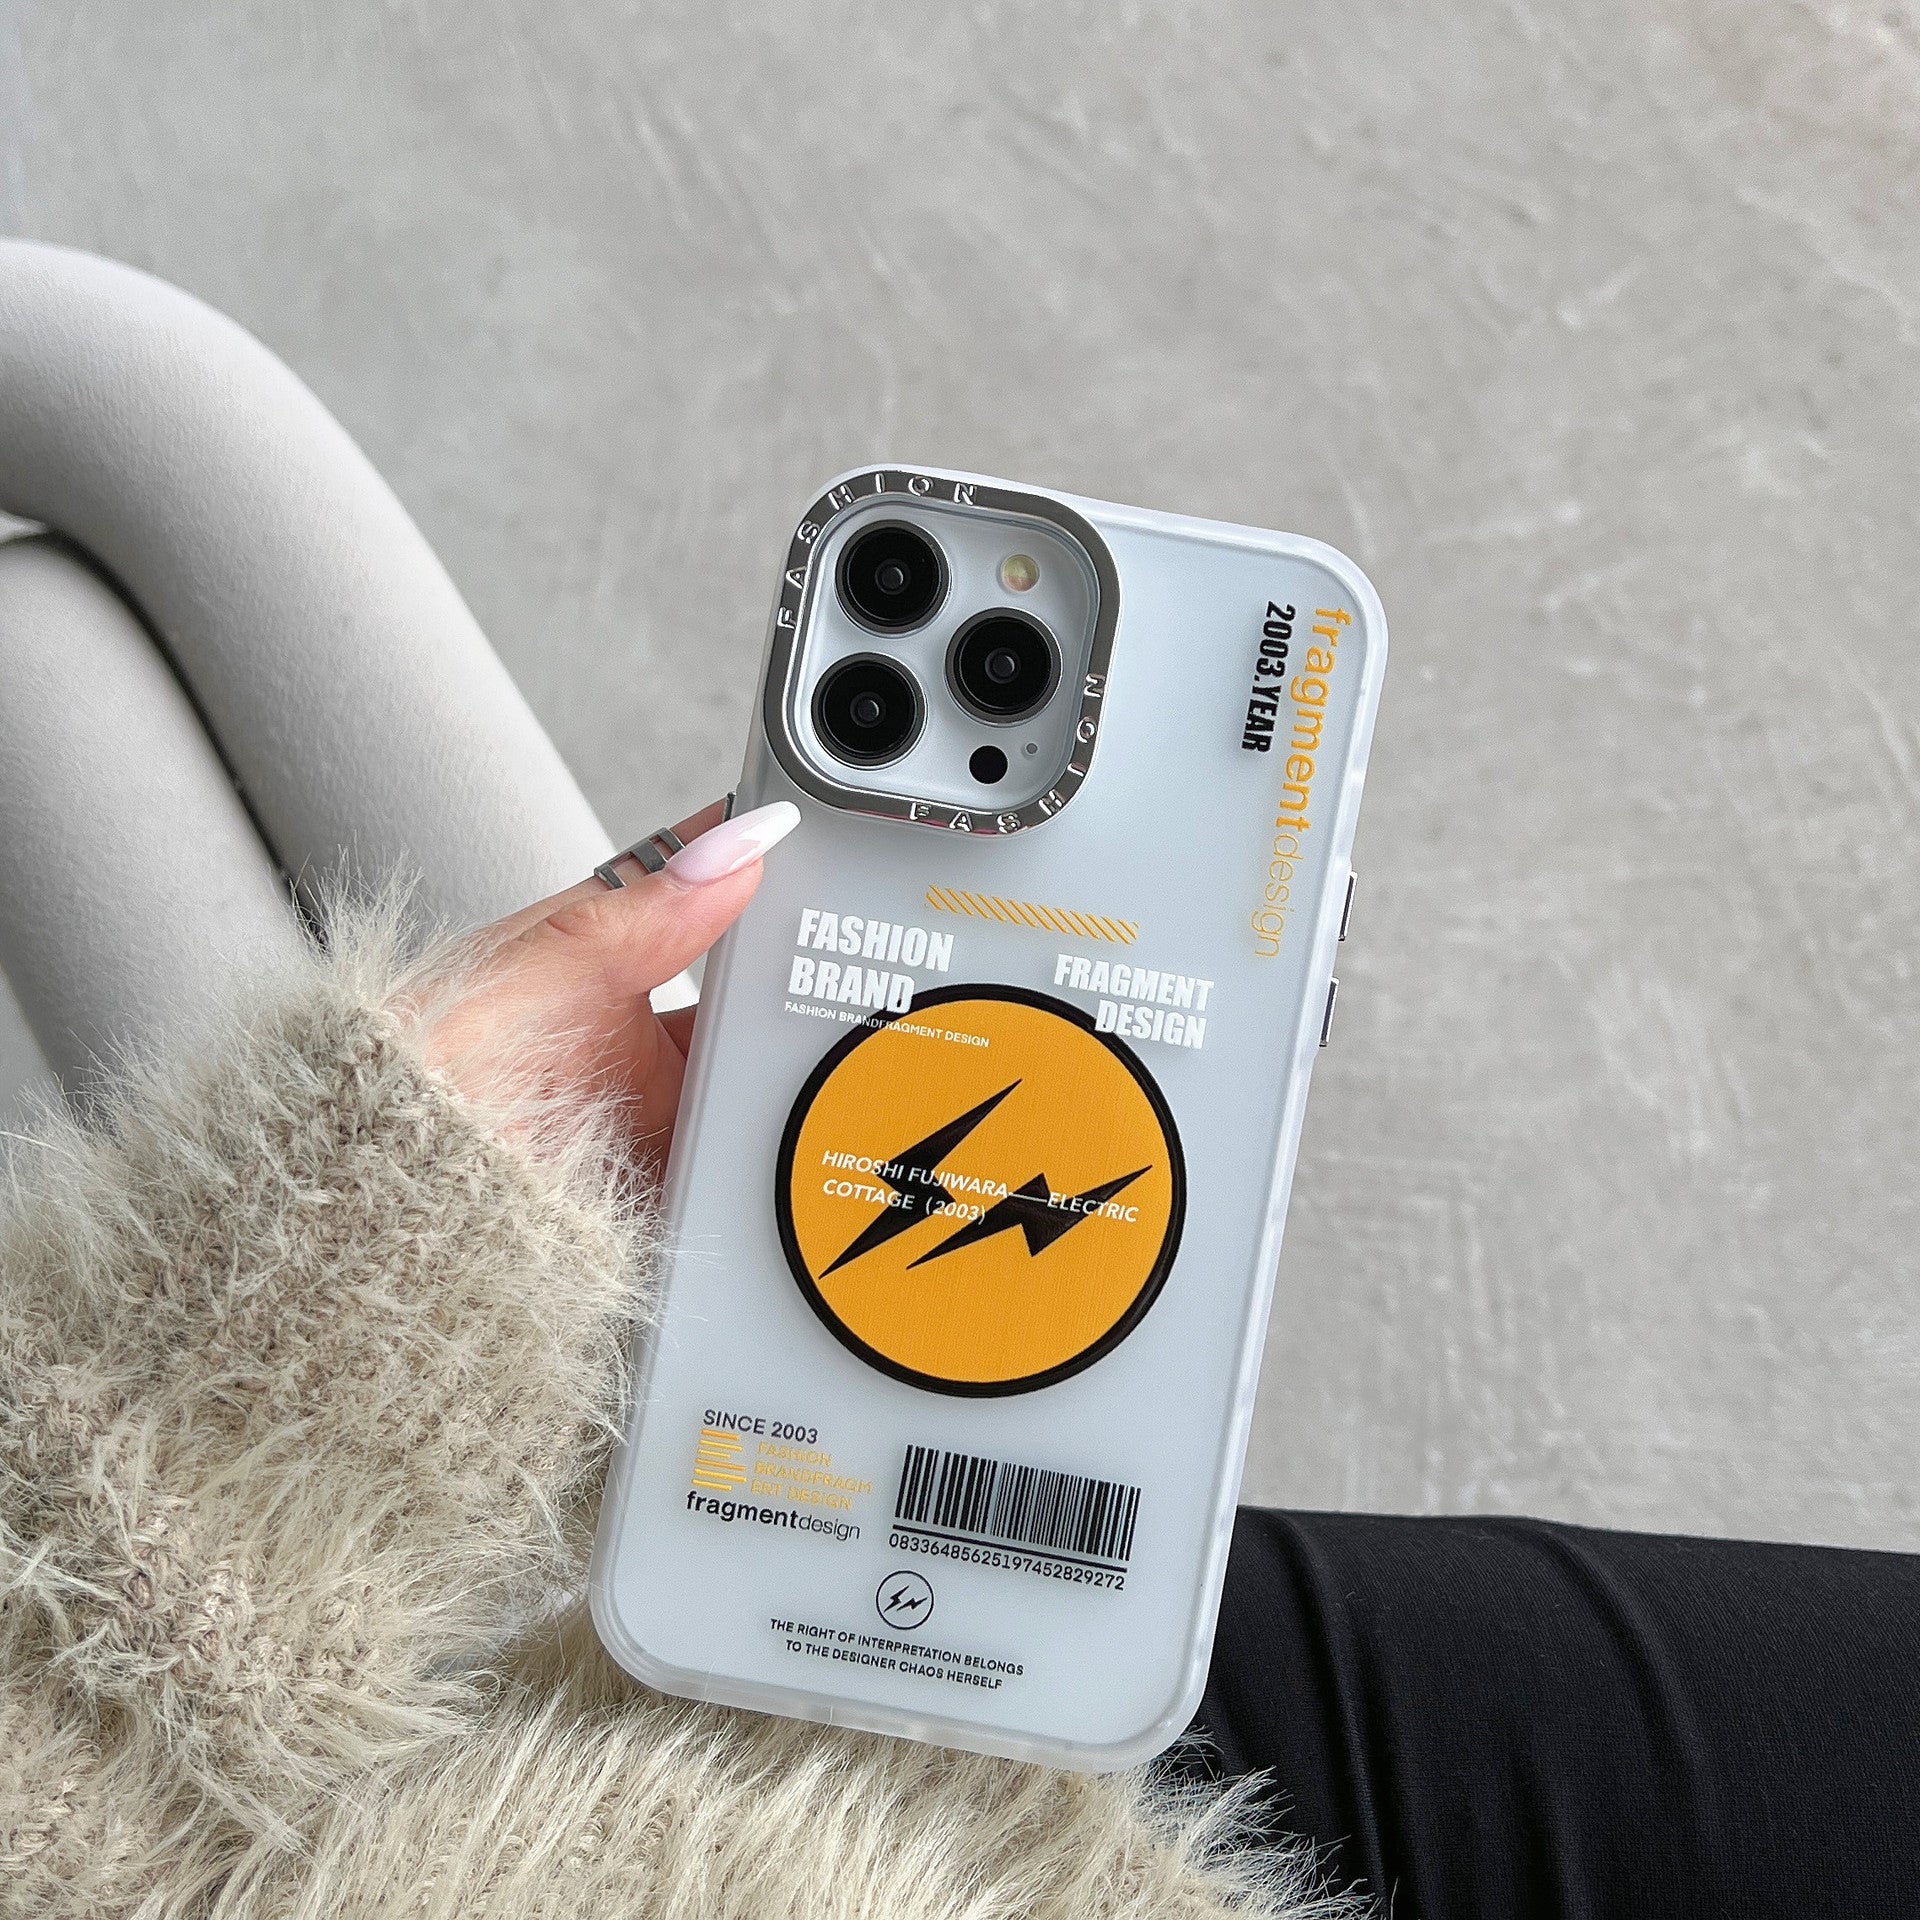 Pikachu Lightning iPhone Case